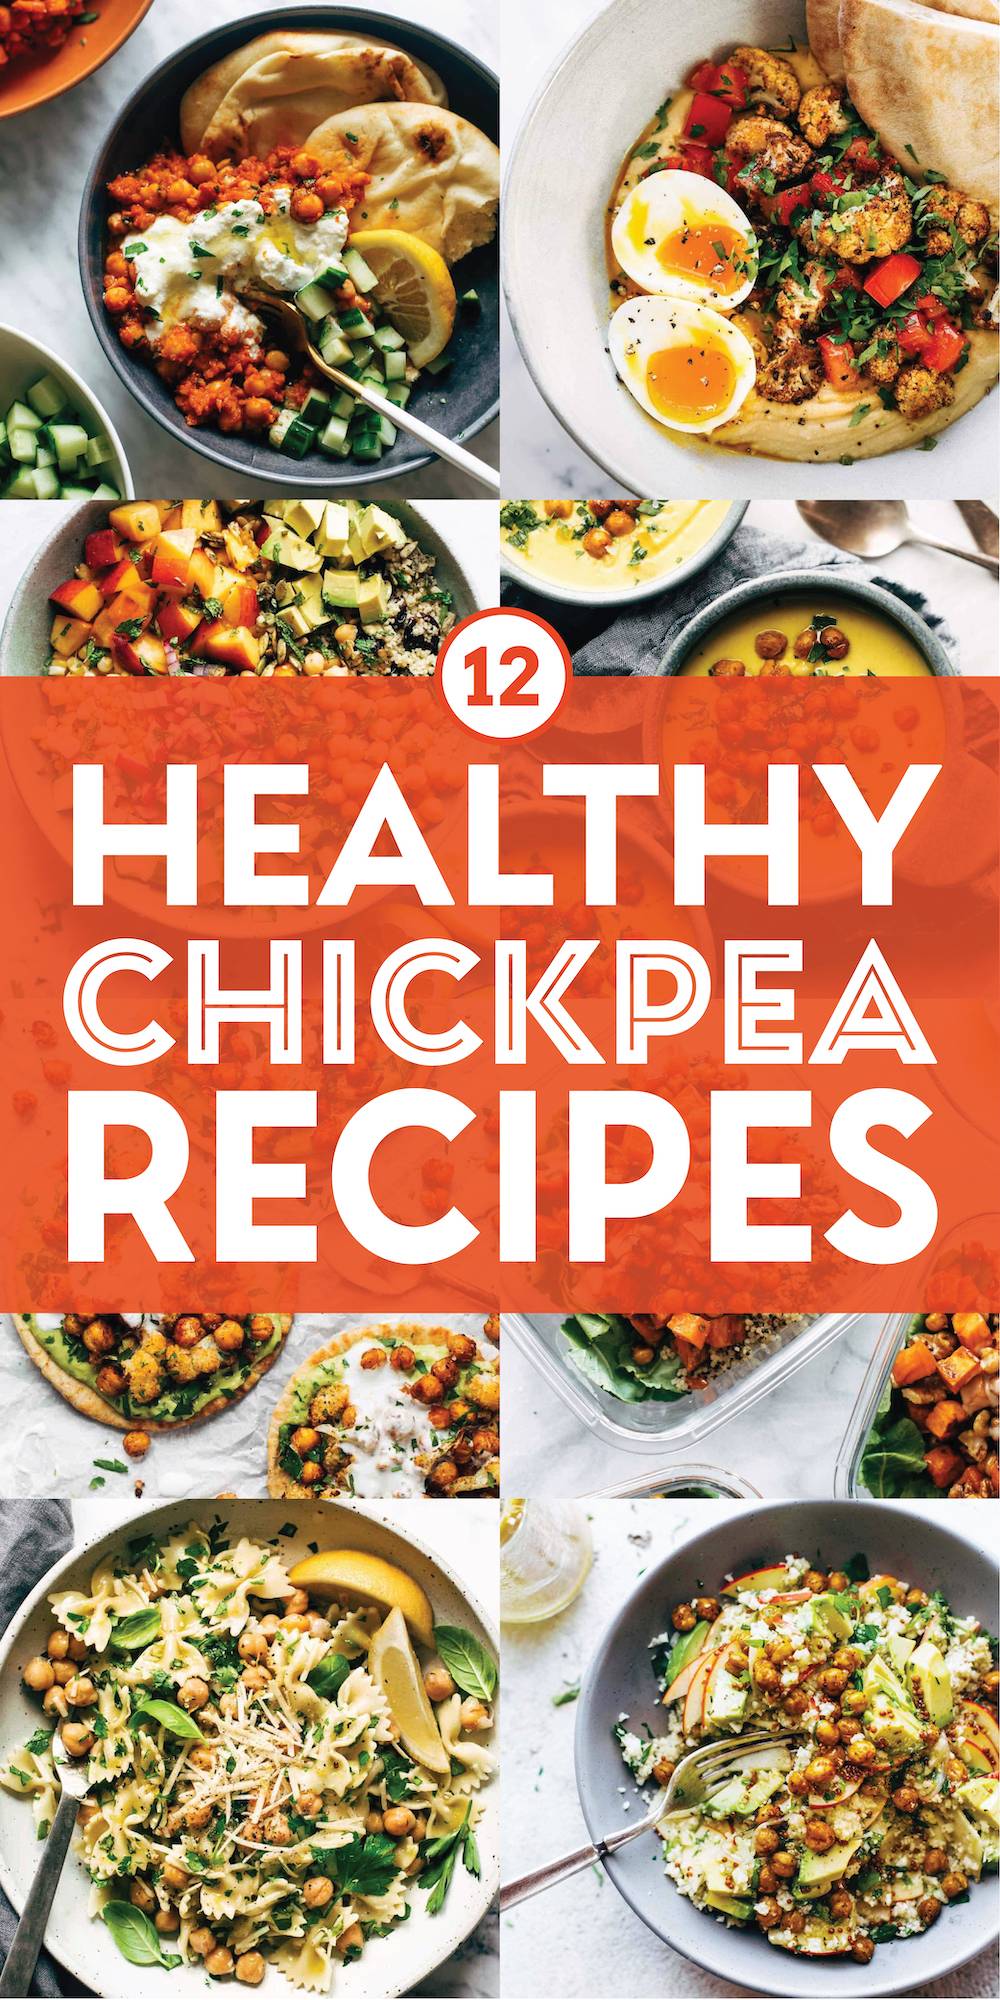 https://pinchofyum.com/wp-content/uploads/Best-Healthy-Chickpea-Recipes-Pin.jpg